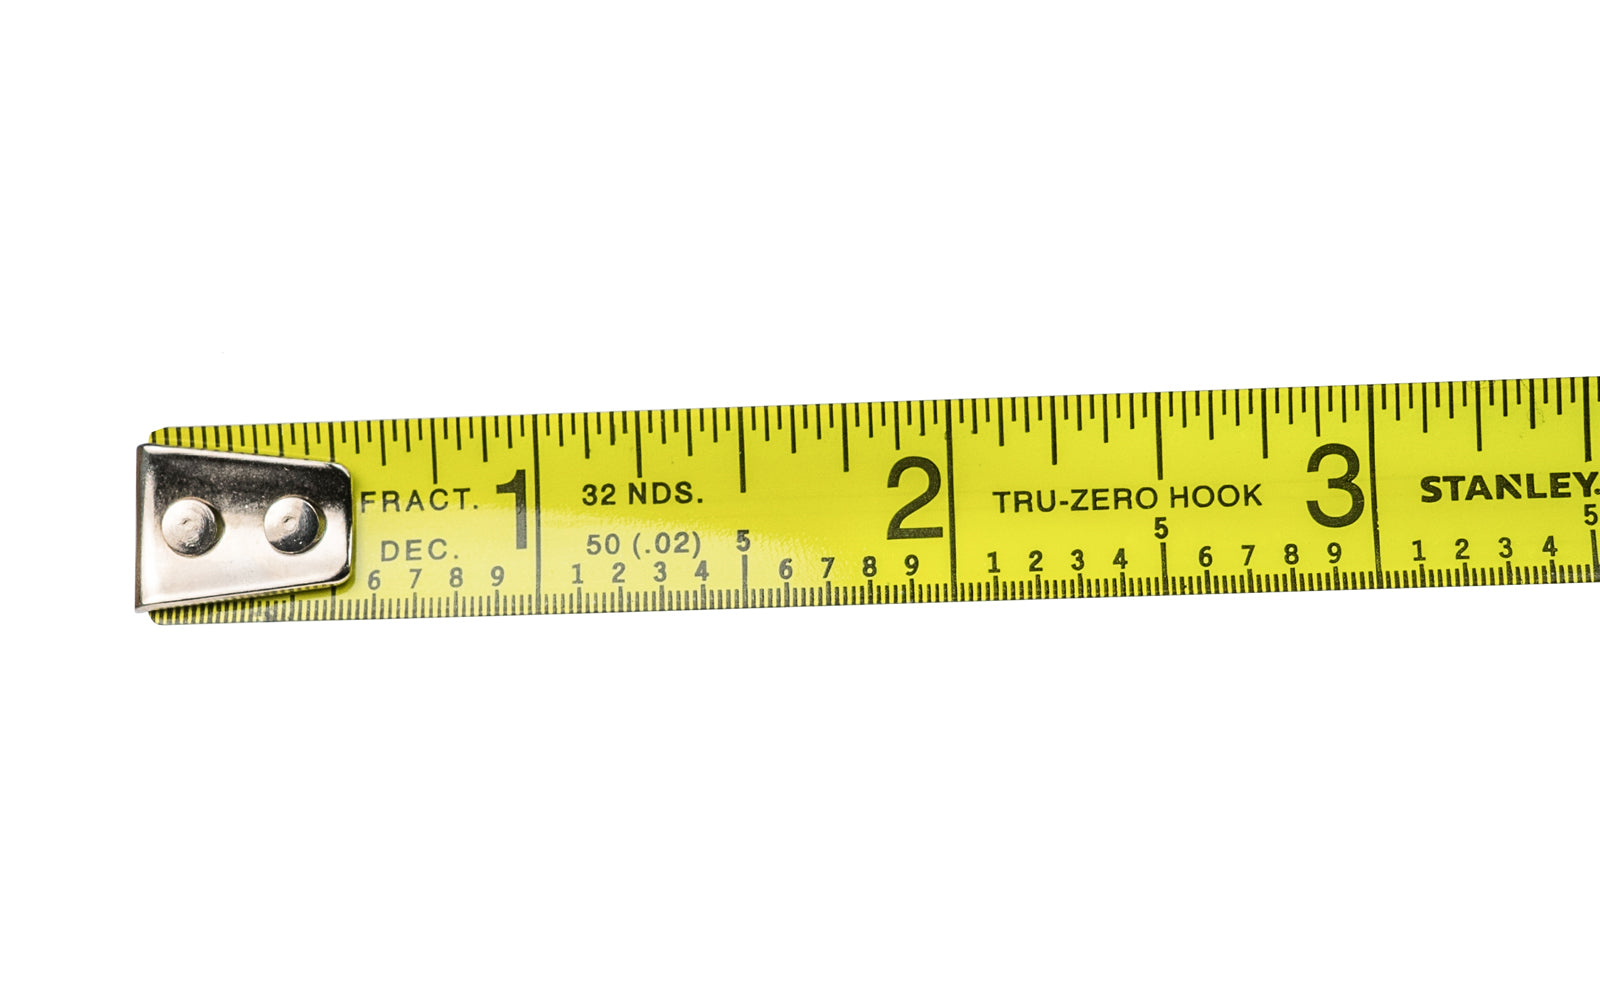 Stanley PowerLock 12 Ft. Fractional/Decimal Engineer's Tape Measure -  Hall's Lumber & Hardware